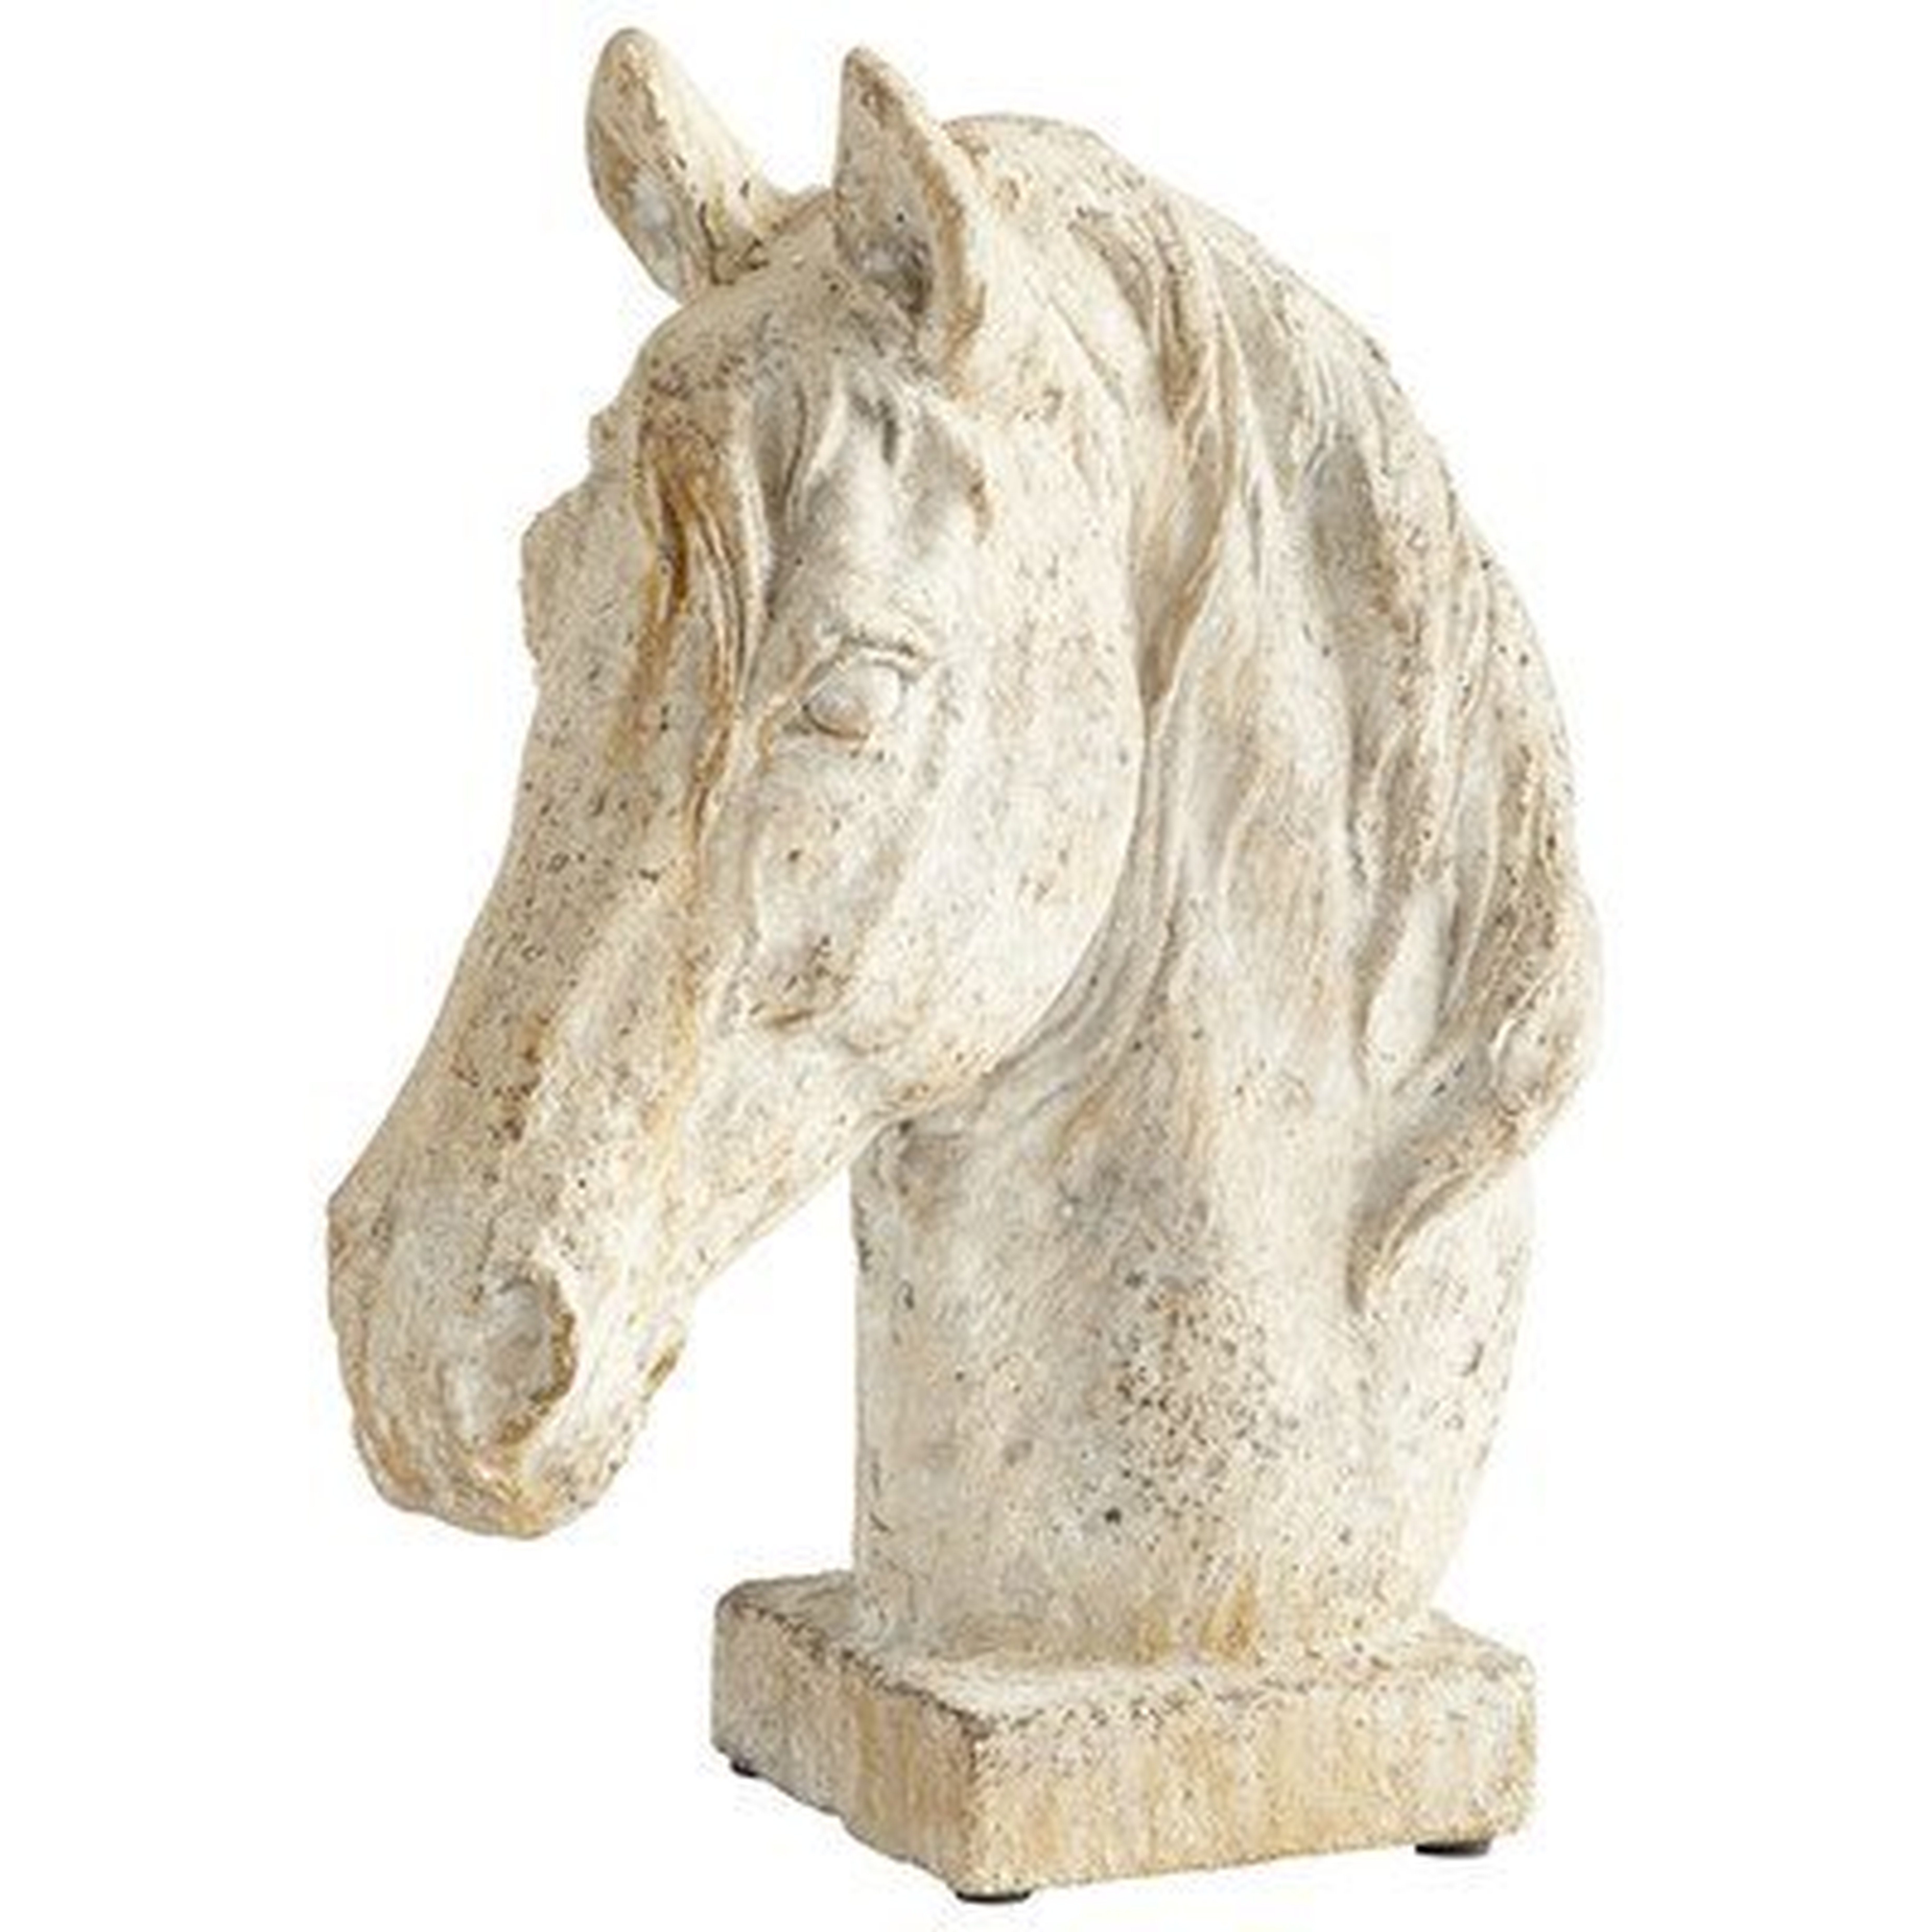 Majestic Mane Horse Sculpture - Wayfair